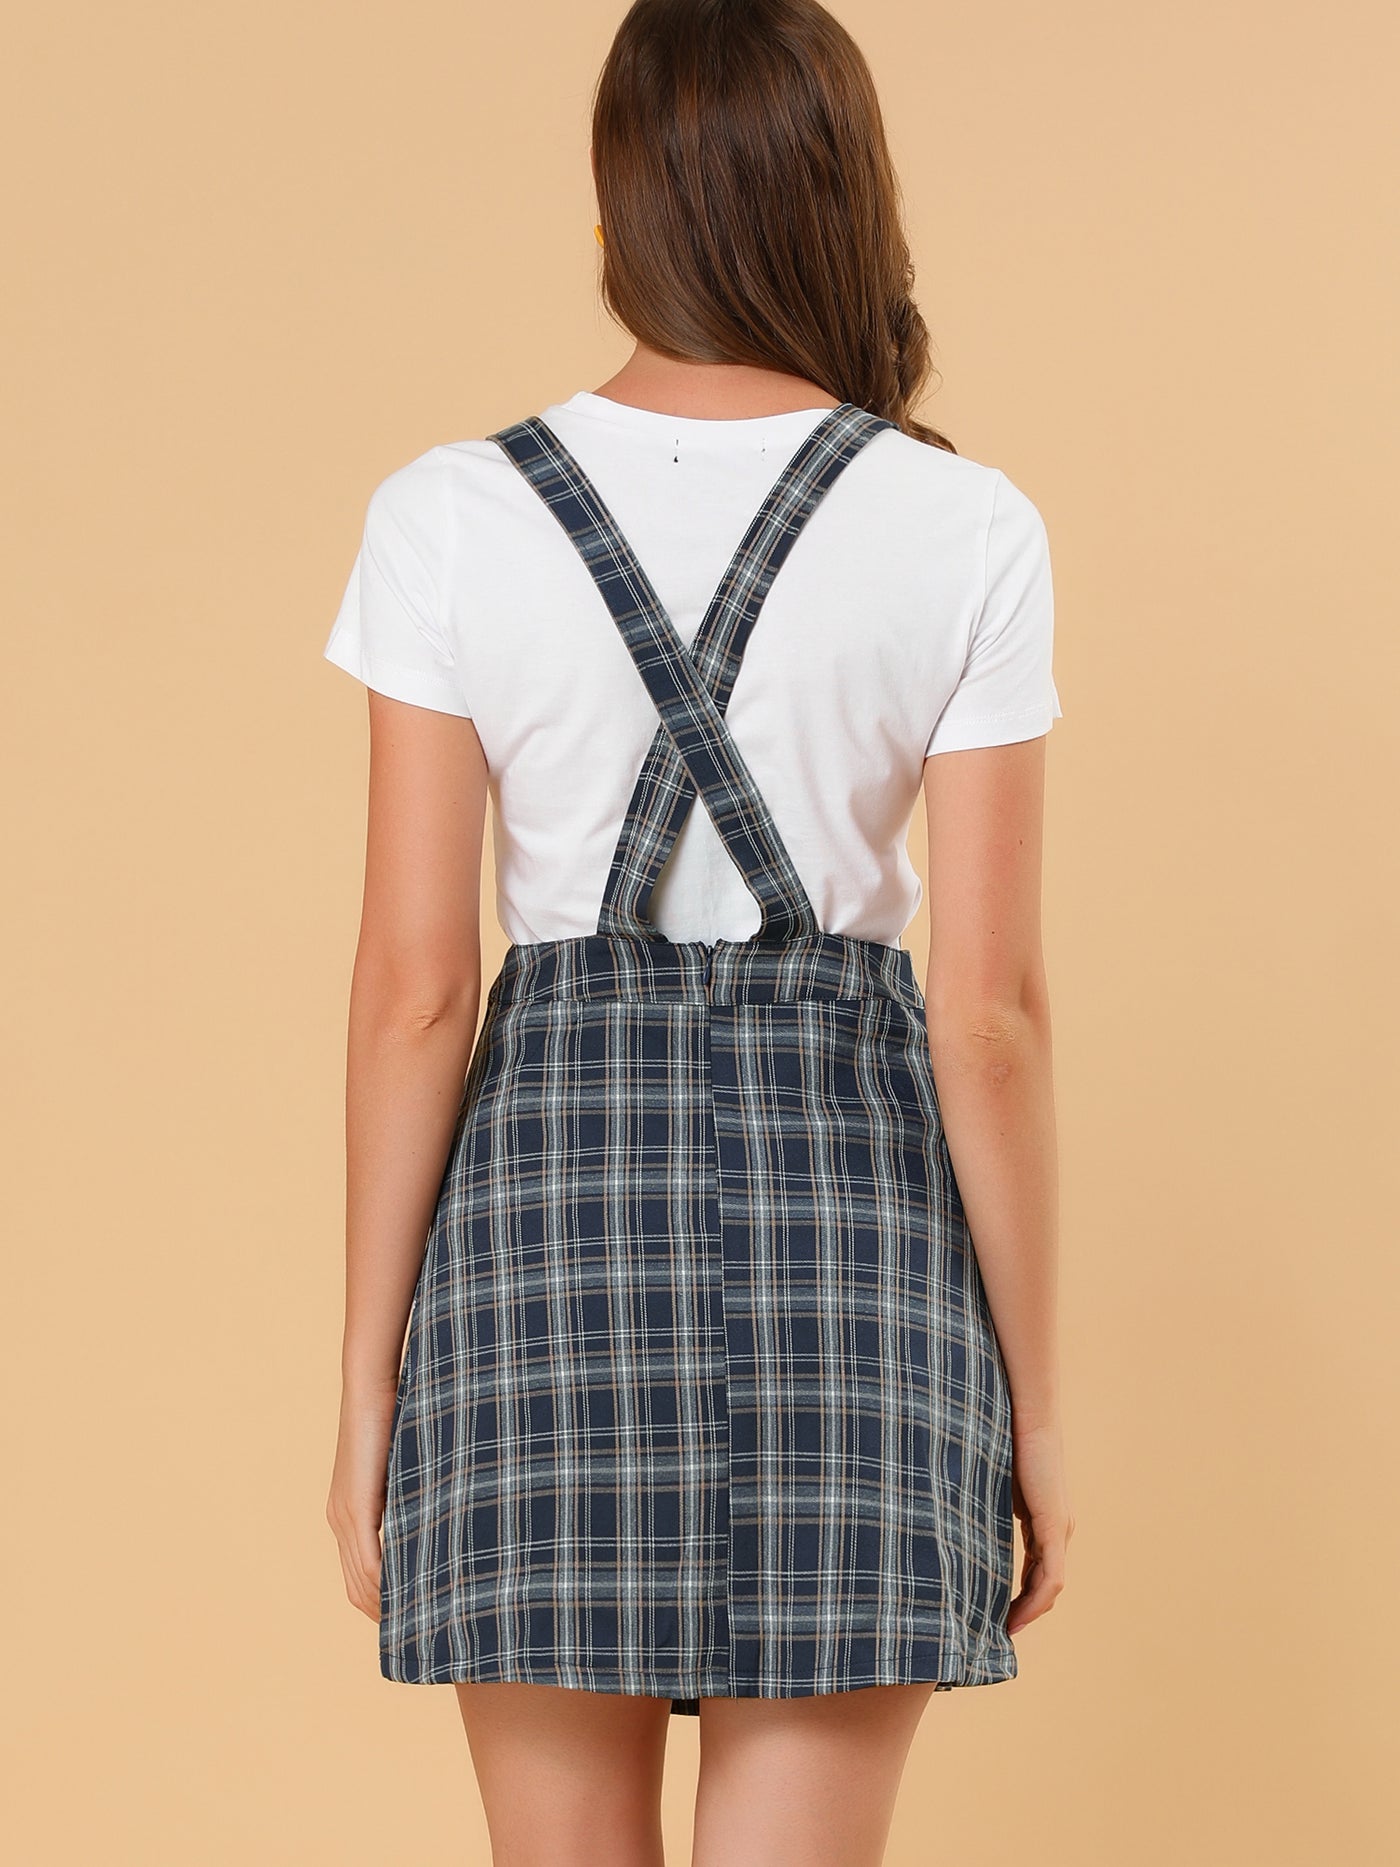 Allegra K Adjustable Strap Above Knee Plaid Printed Overall Suspender Skirt